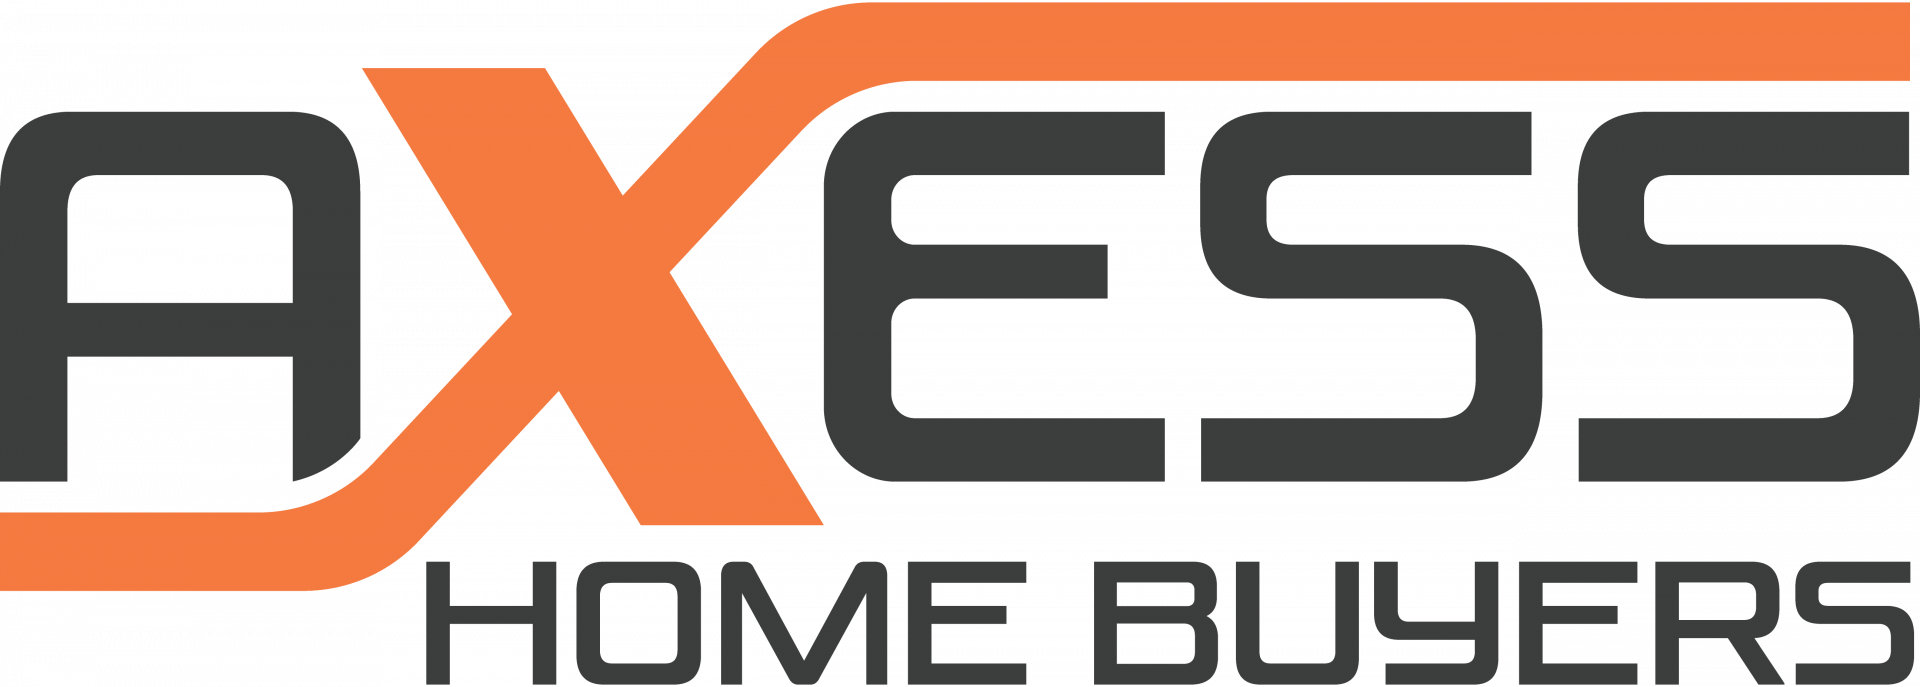 Axess Home Buyers logo